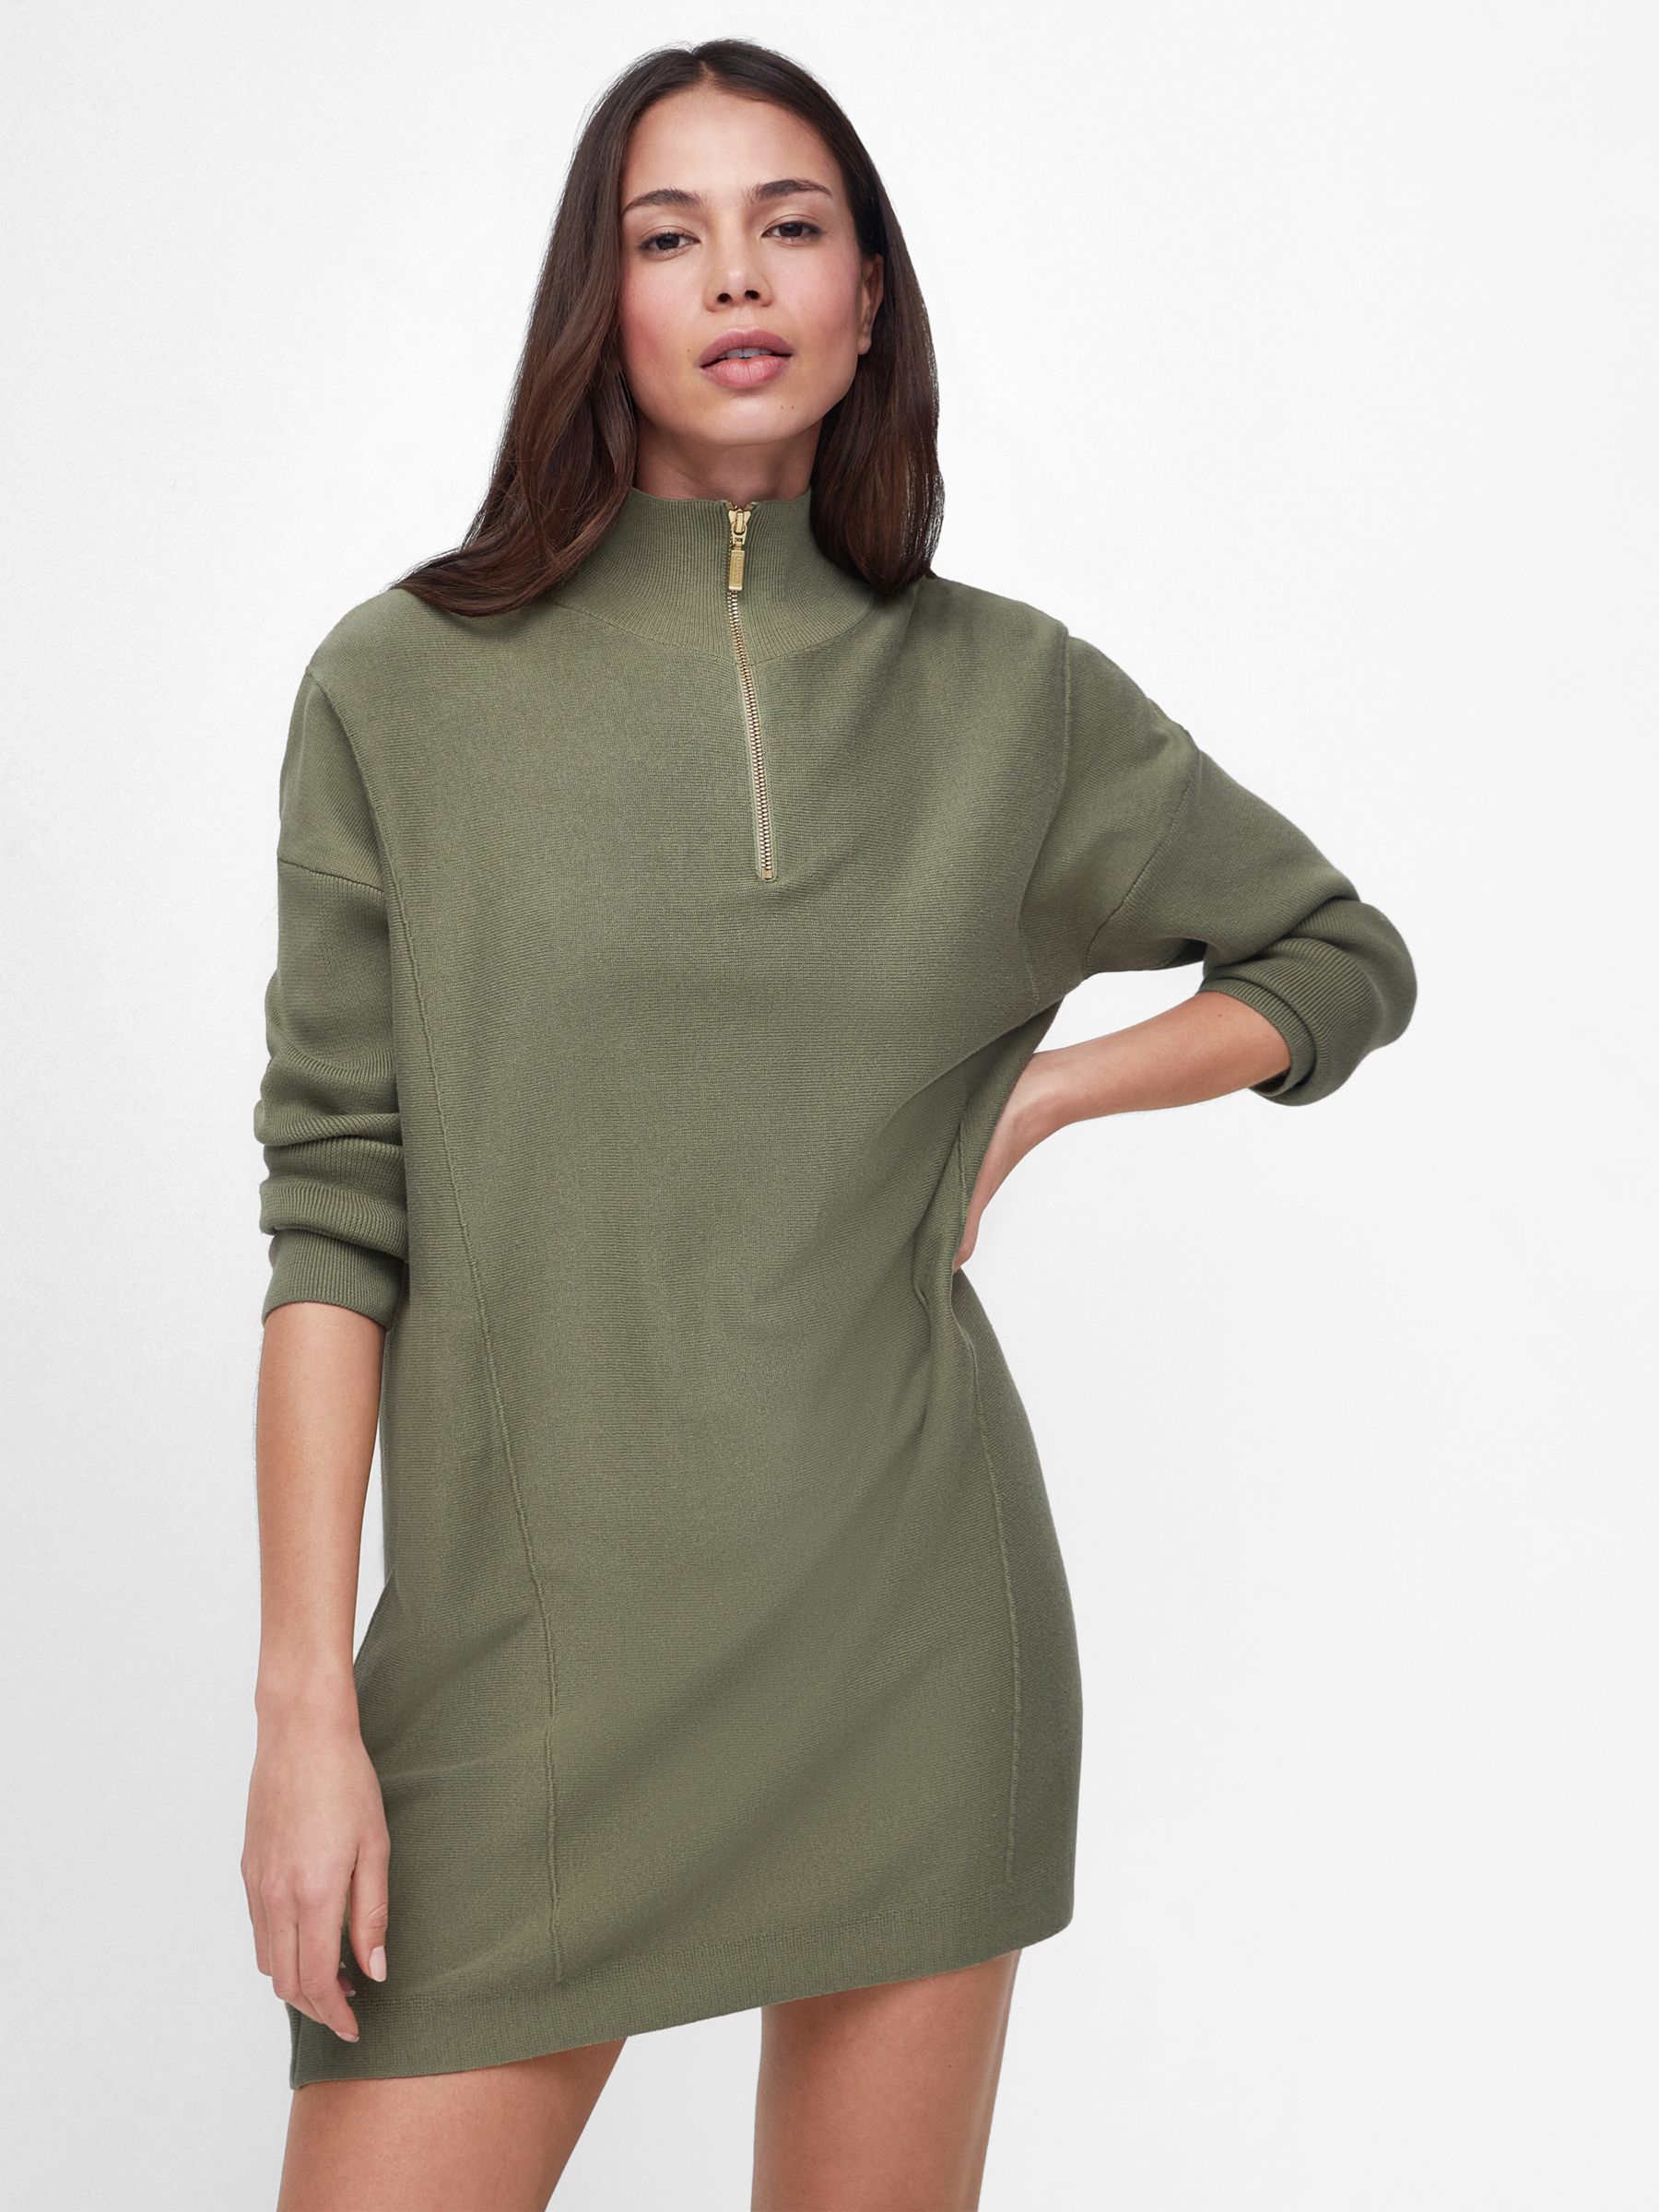 Buy Green Roll Neck Knitted Dress 22, Dresses